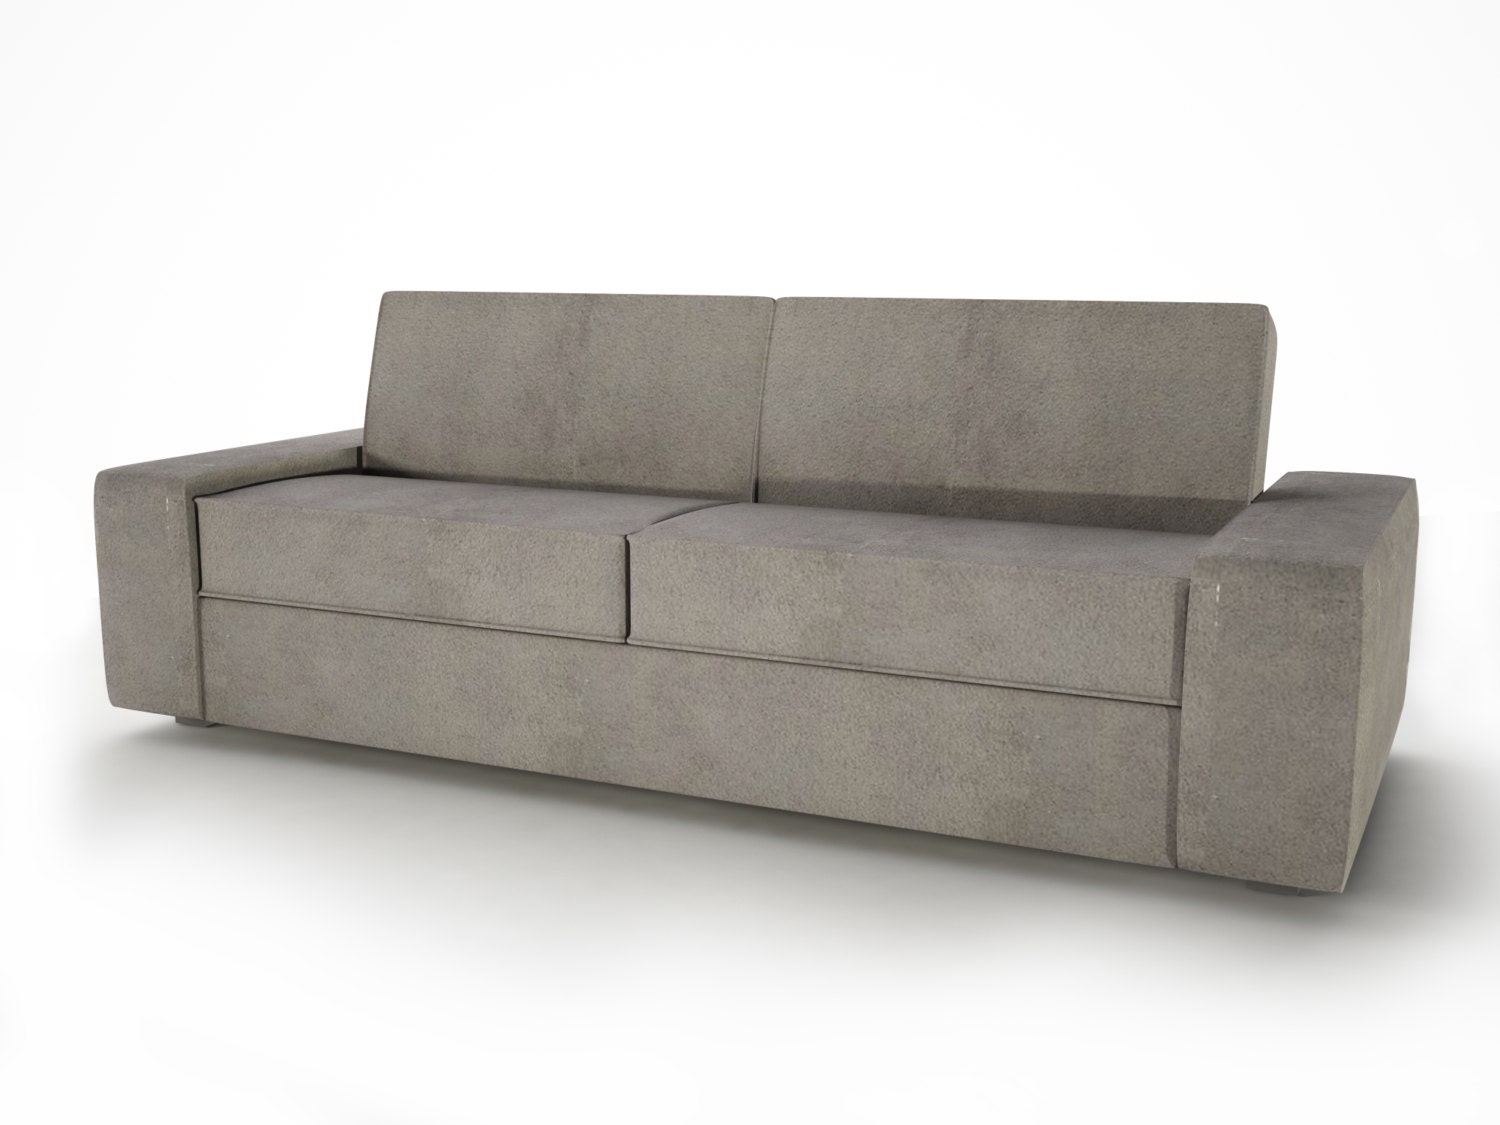 Slipcover For Ikea 3 Seat Kivik Bed Sofa